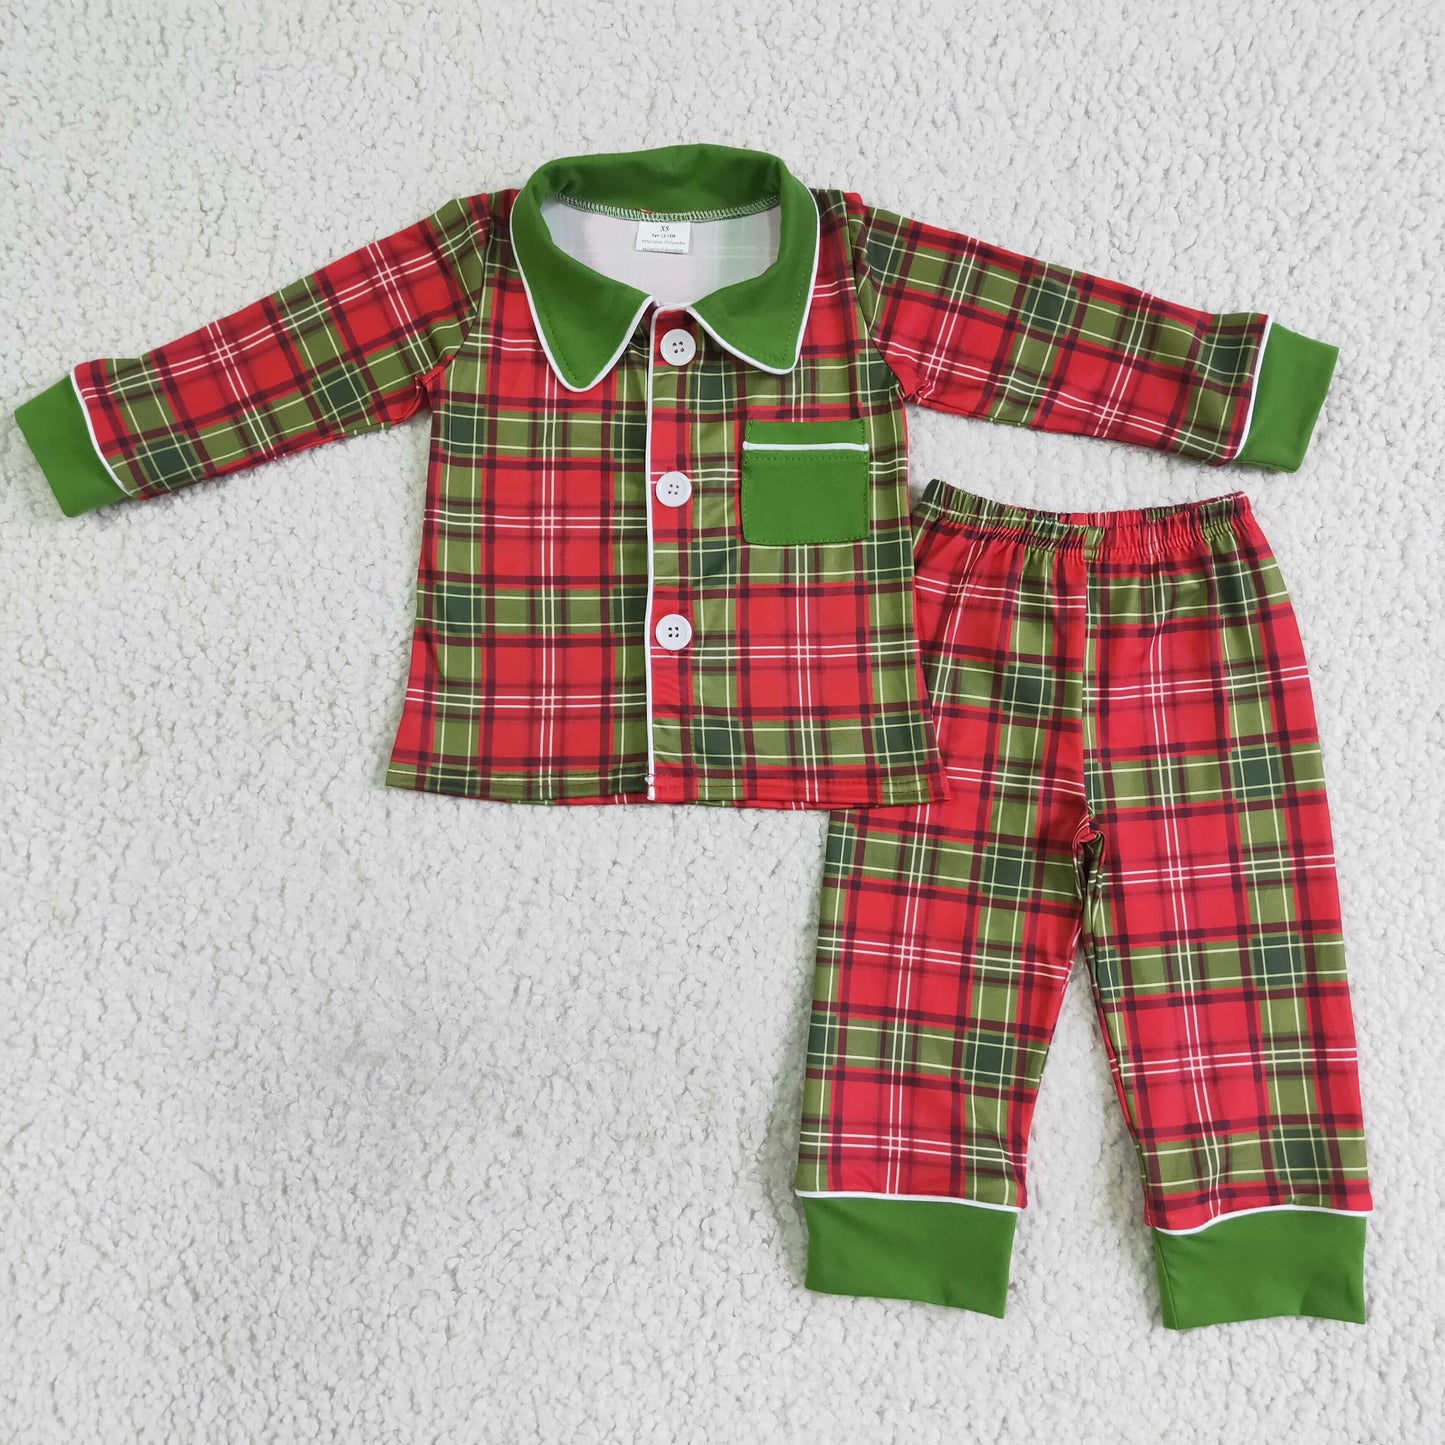 Red and green plaid sleepwear boy Christmas pajamas